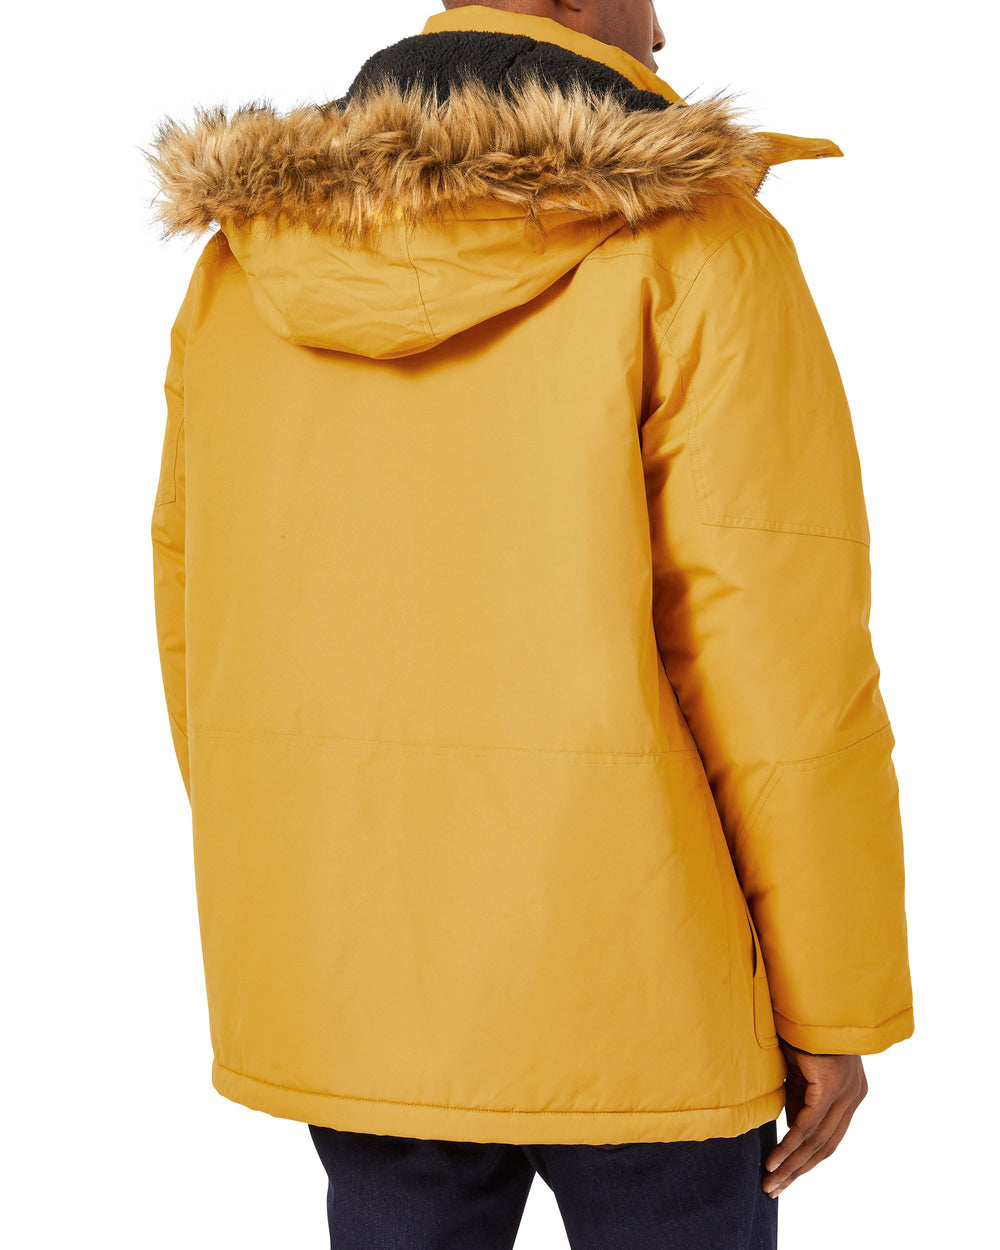 Men's Heavy Snorkel Coat with Faux Fur Hood - Dull Gold